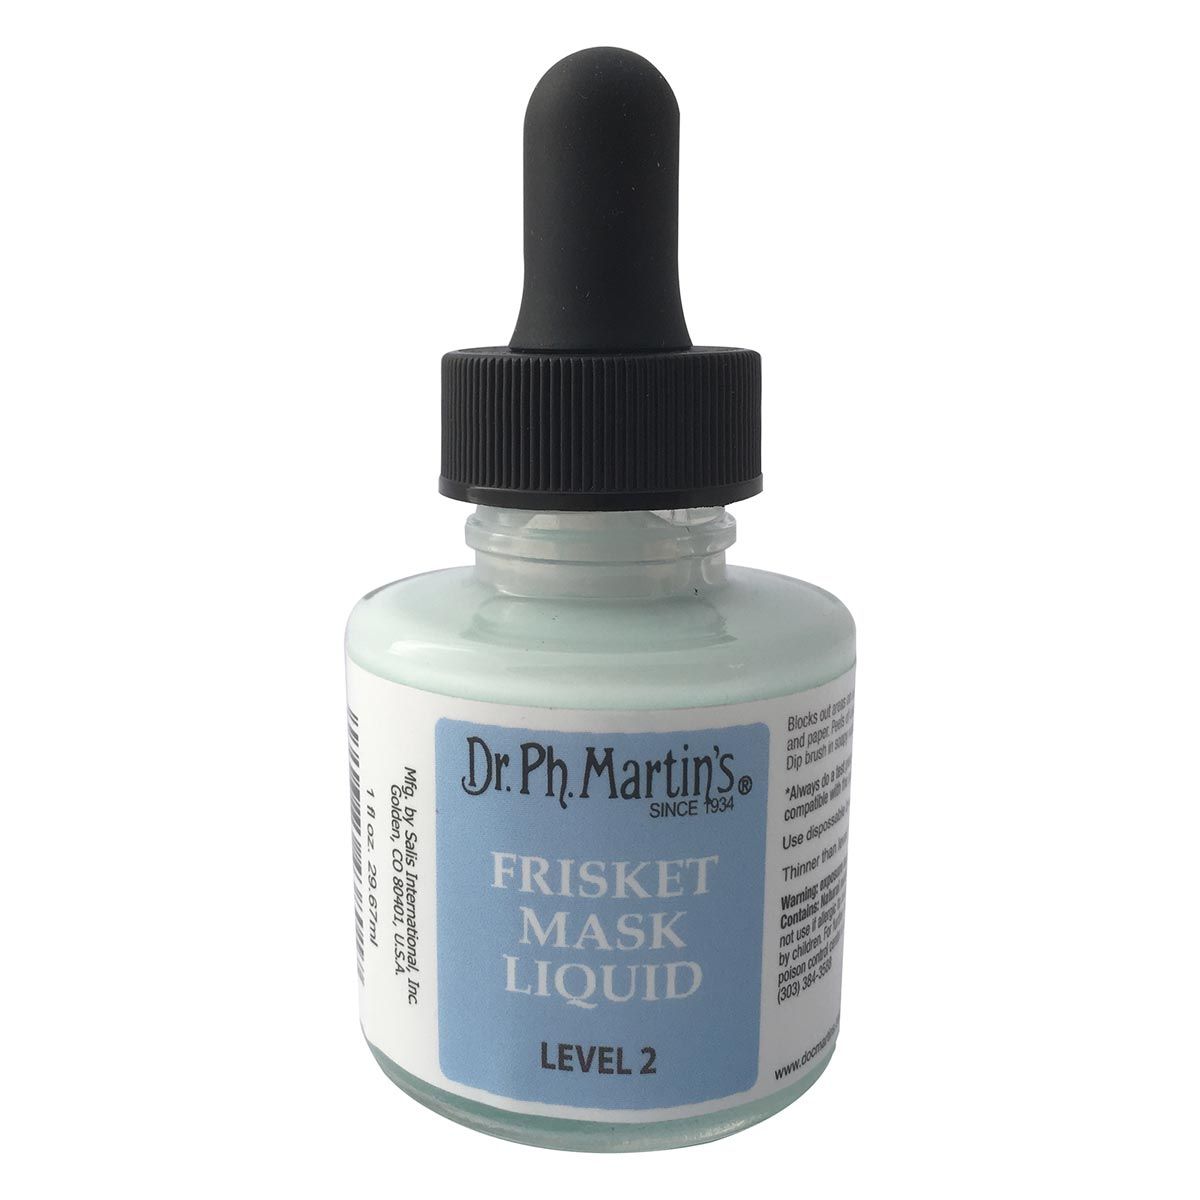 Dr Ph Martin's Frisket Mask Liquid (Level 1) 1 oz